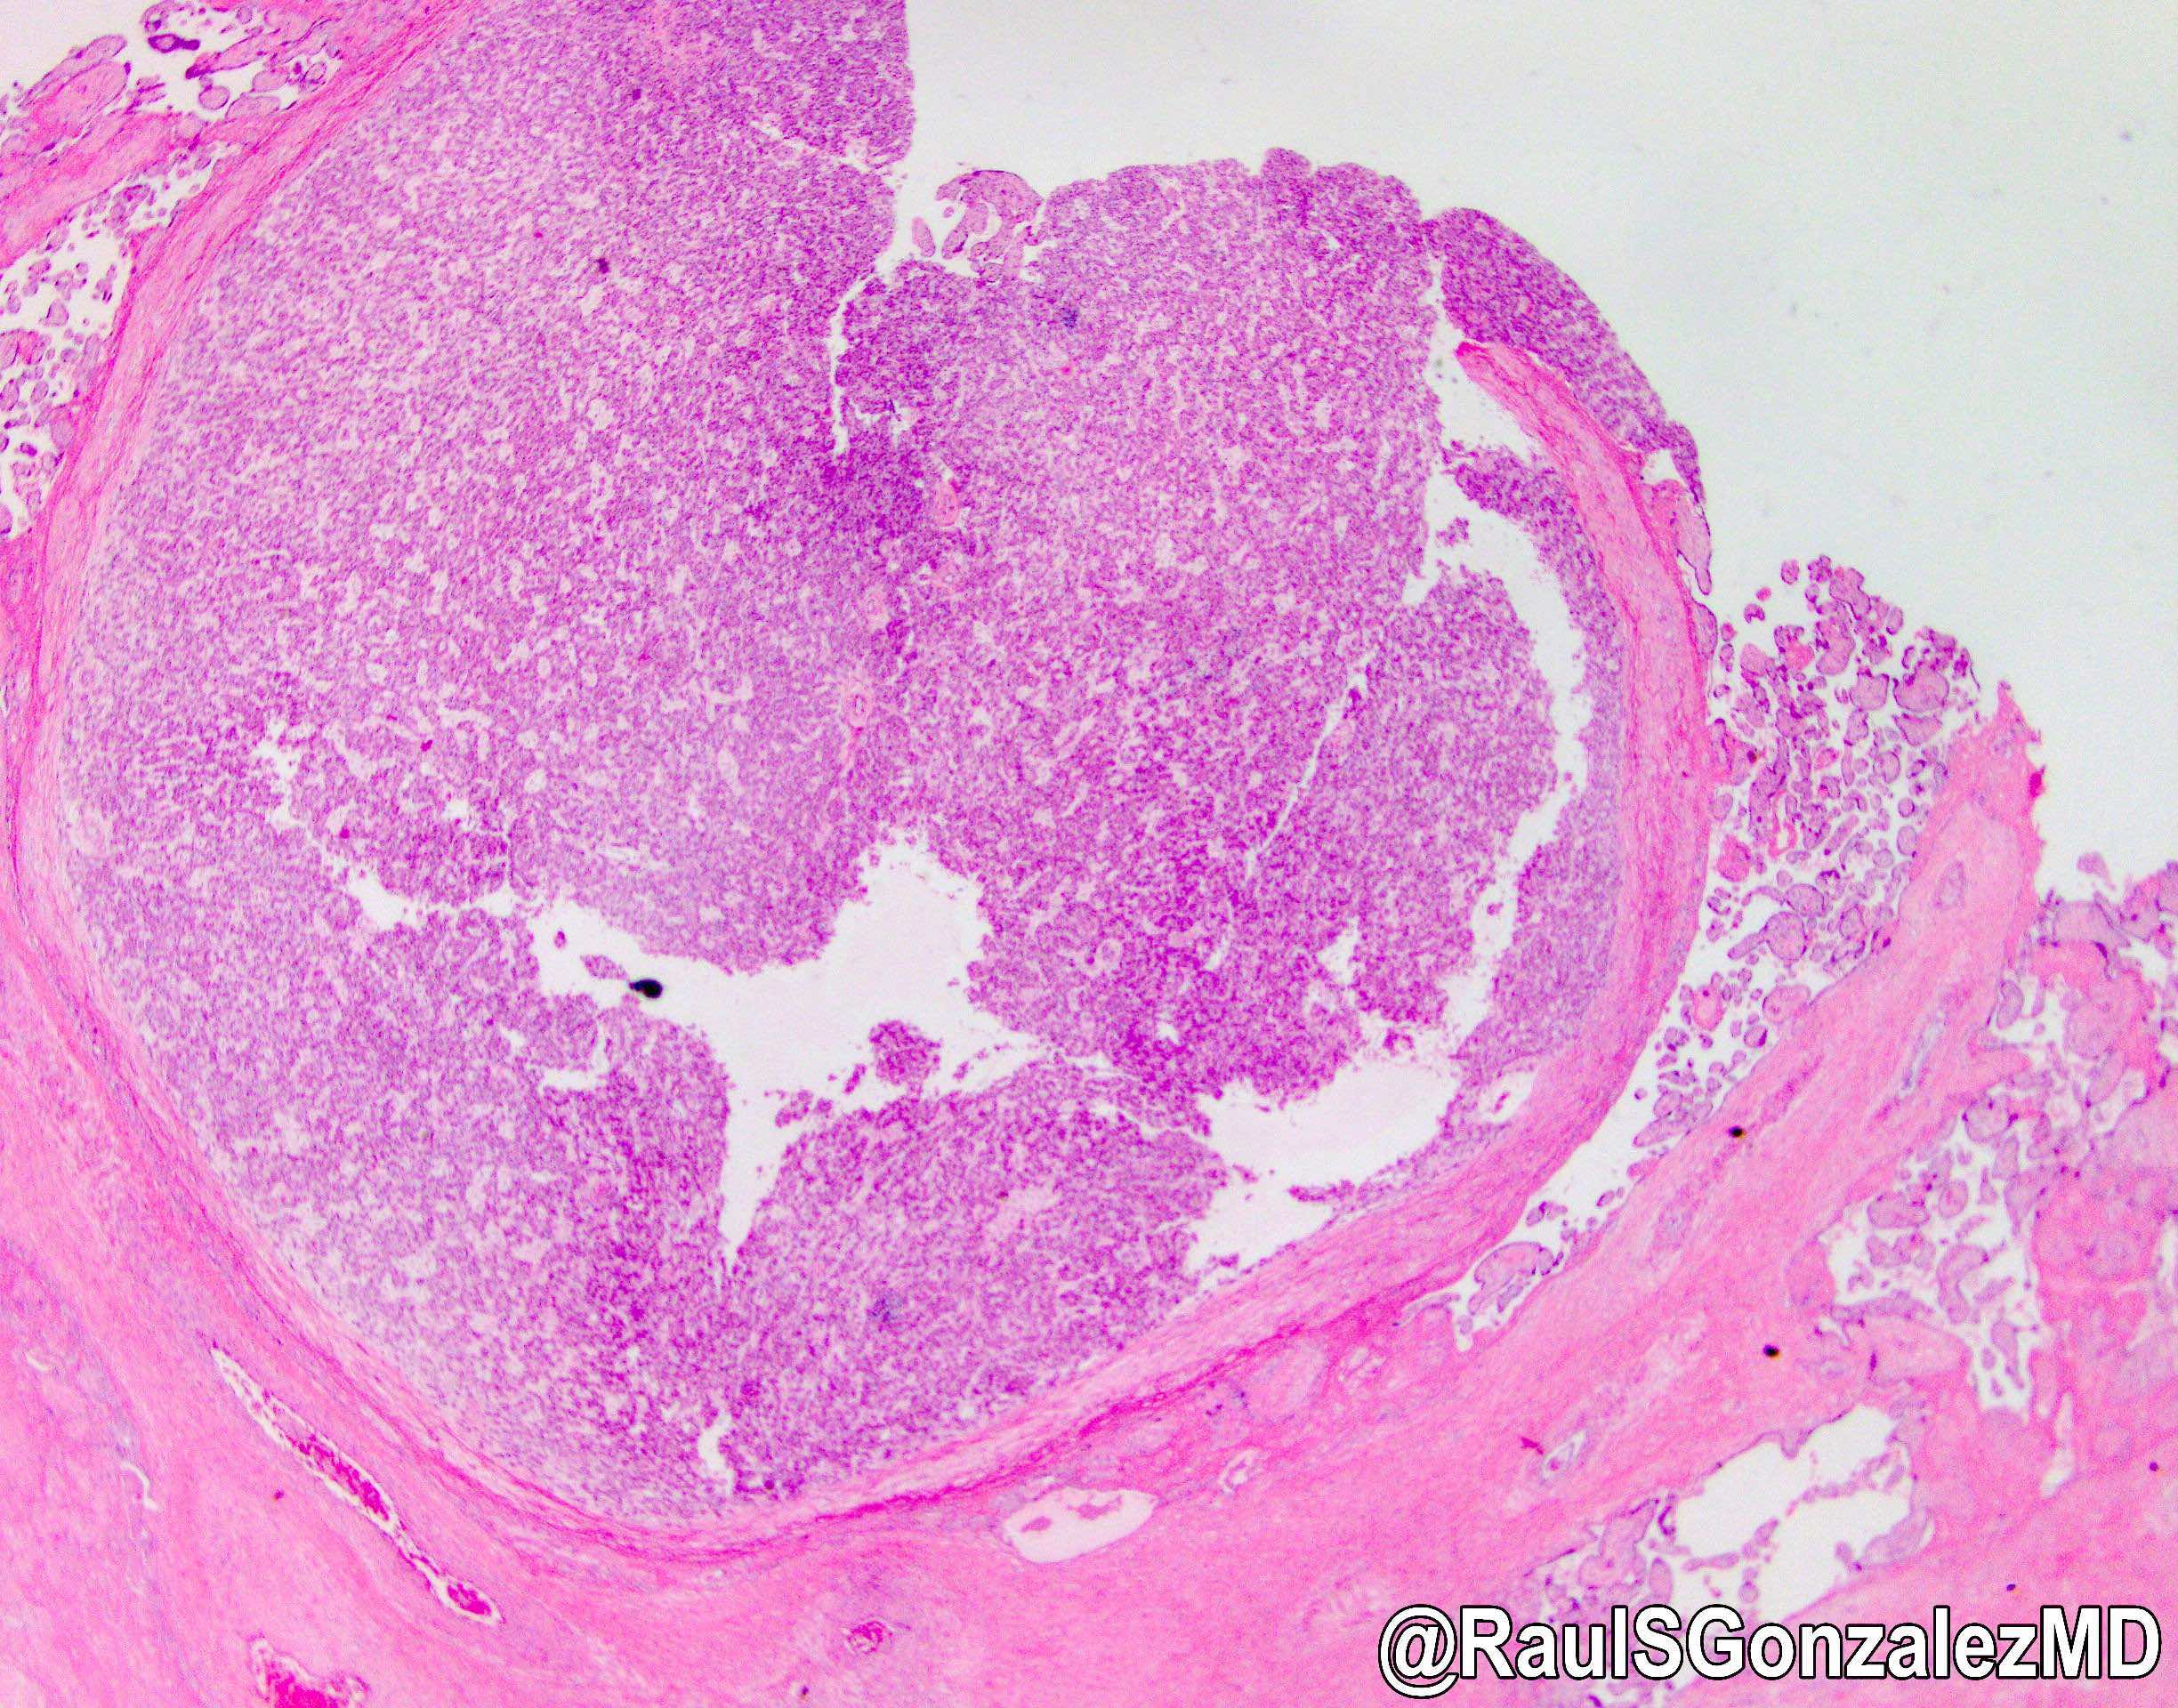 Hepatocellular adenoma-like lesion of placenta